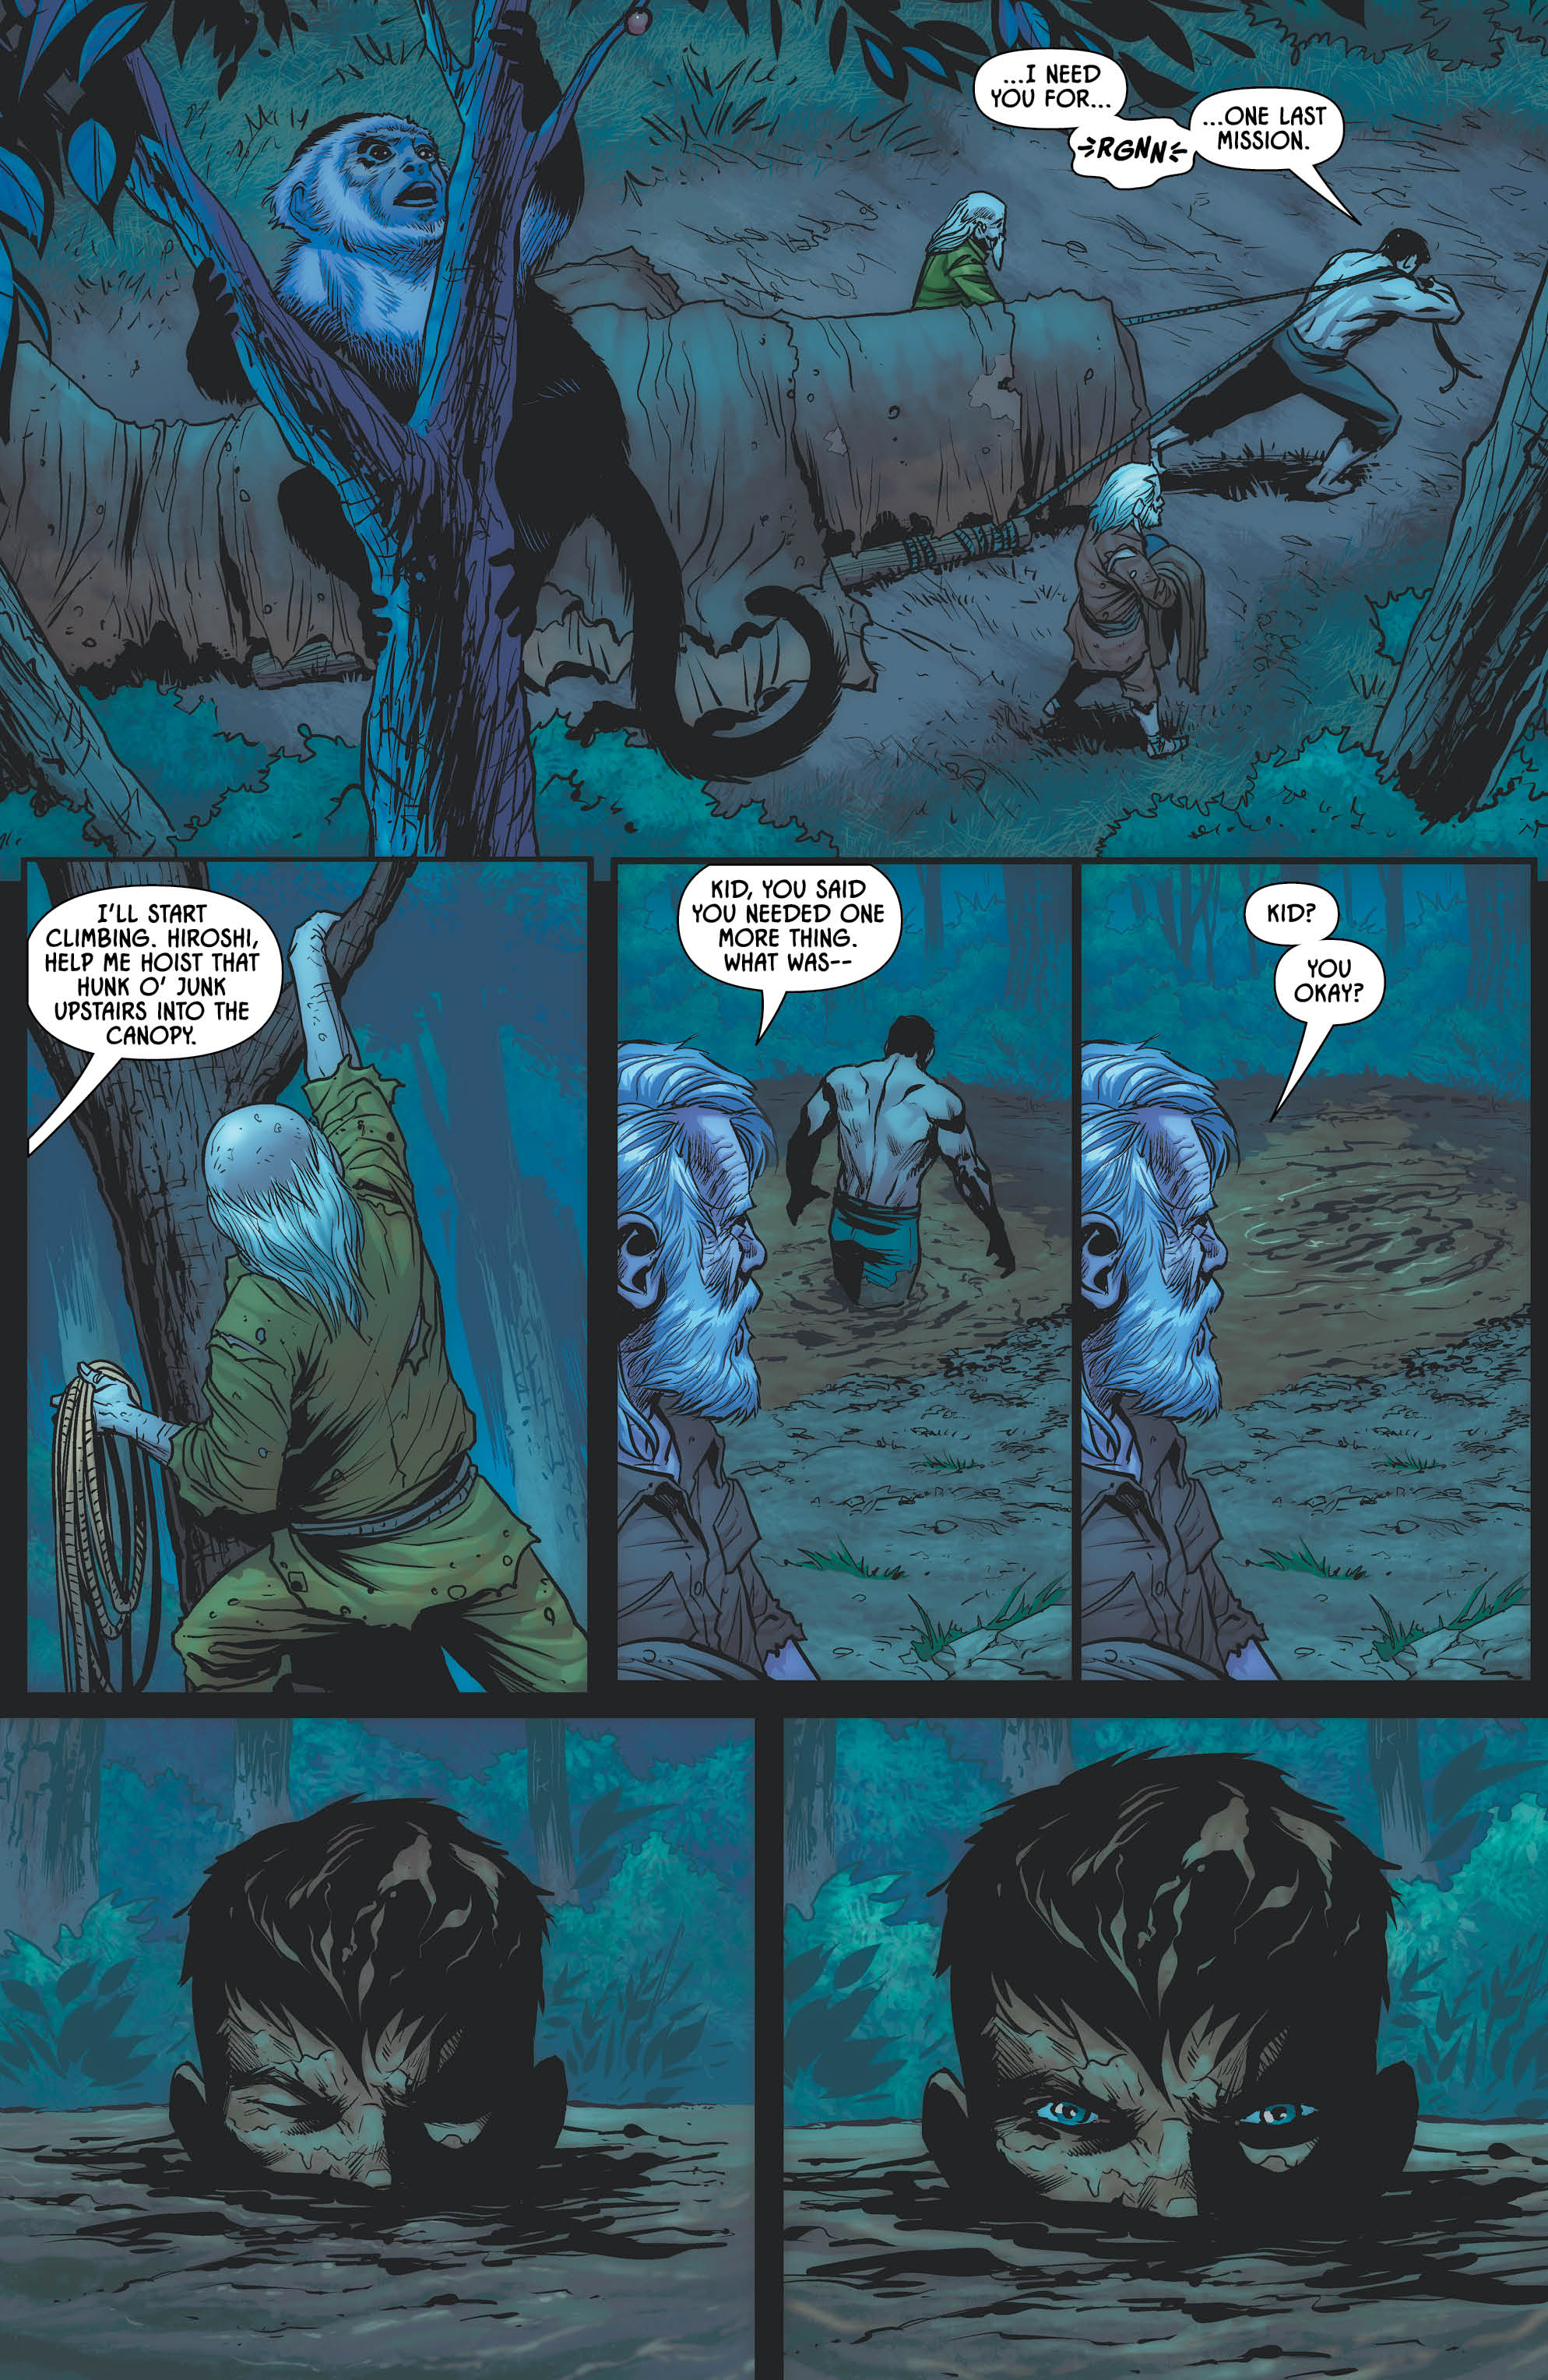 Detective Comics #1011 page 2